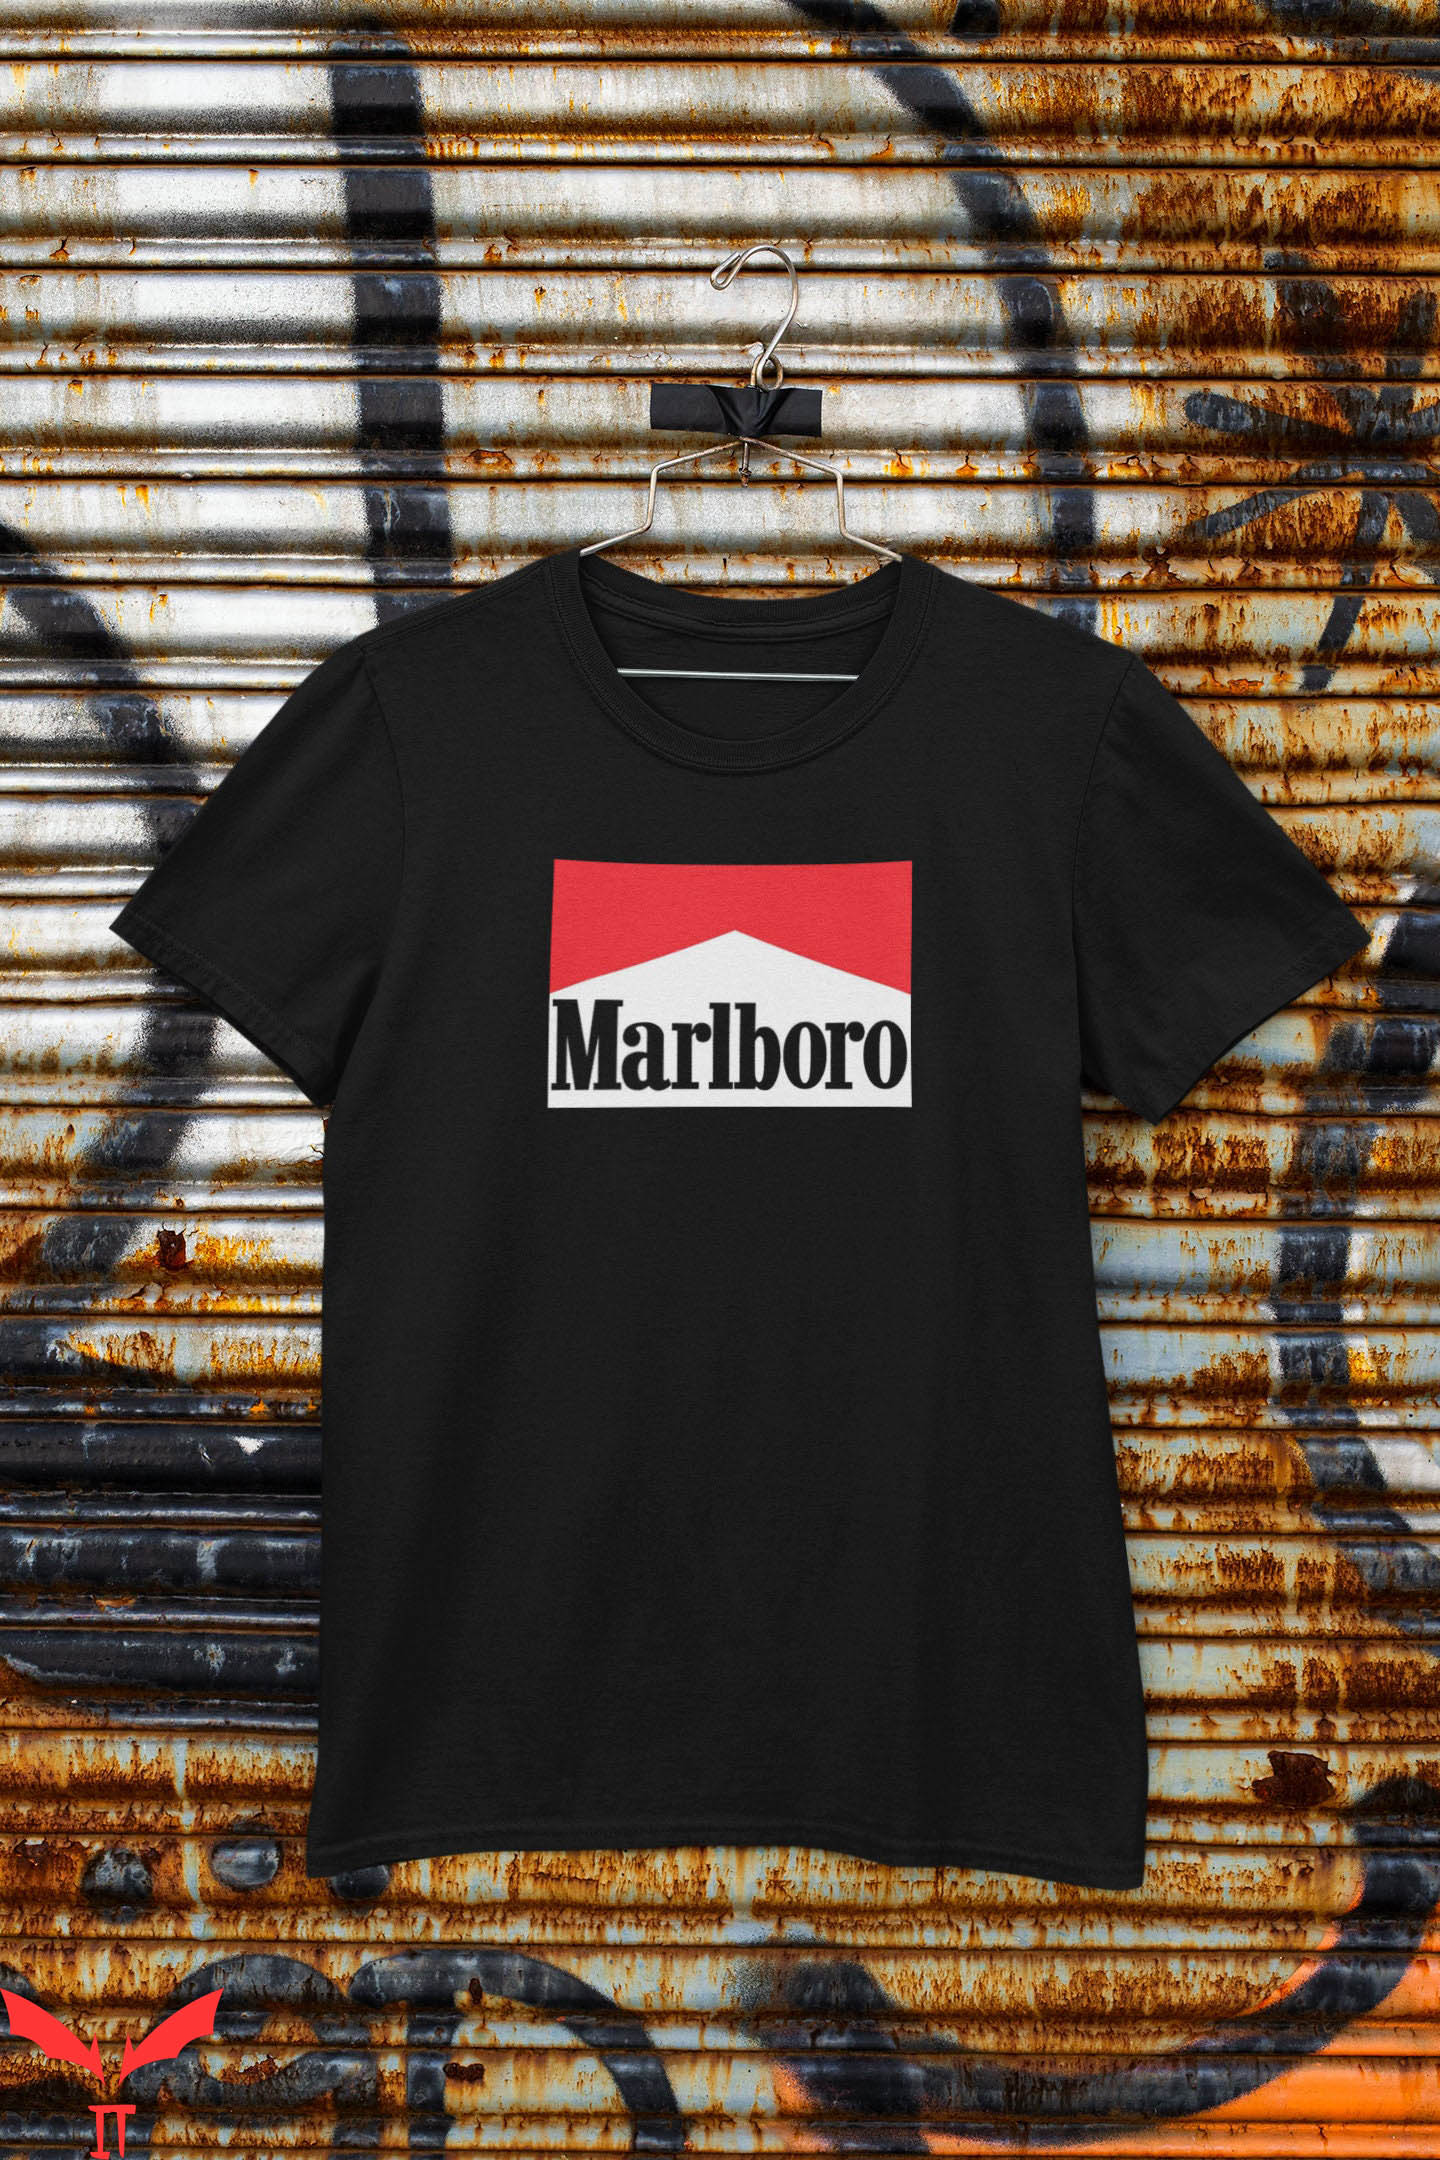 Marlboro T-Shirt Logo Trendy Funky Coloured Tee Shirt